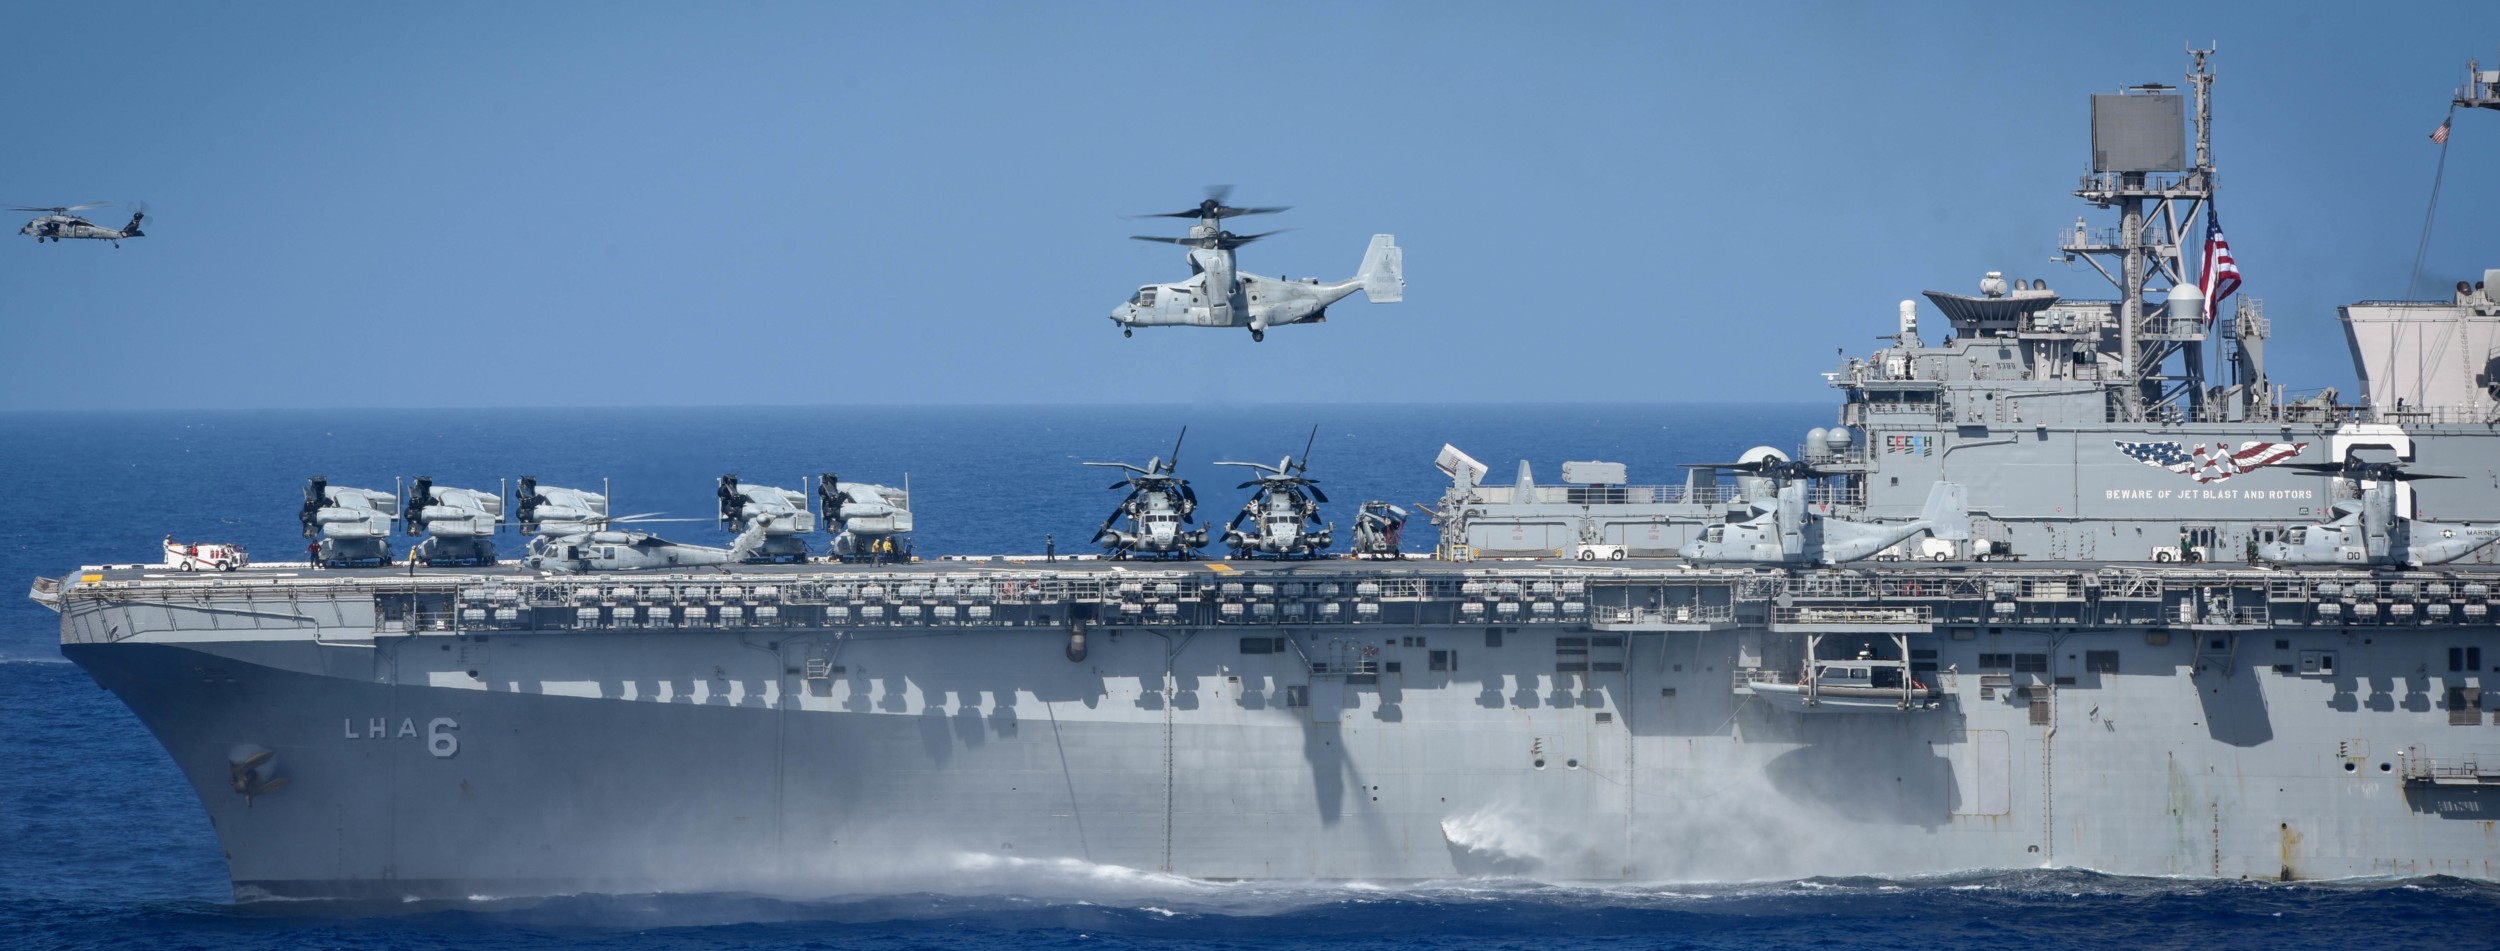 lha-6 uss america amphibious assault ship landing us navy marines vmm-265 mv-22b osprey 155